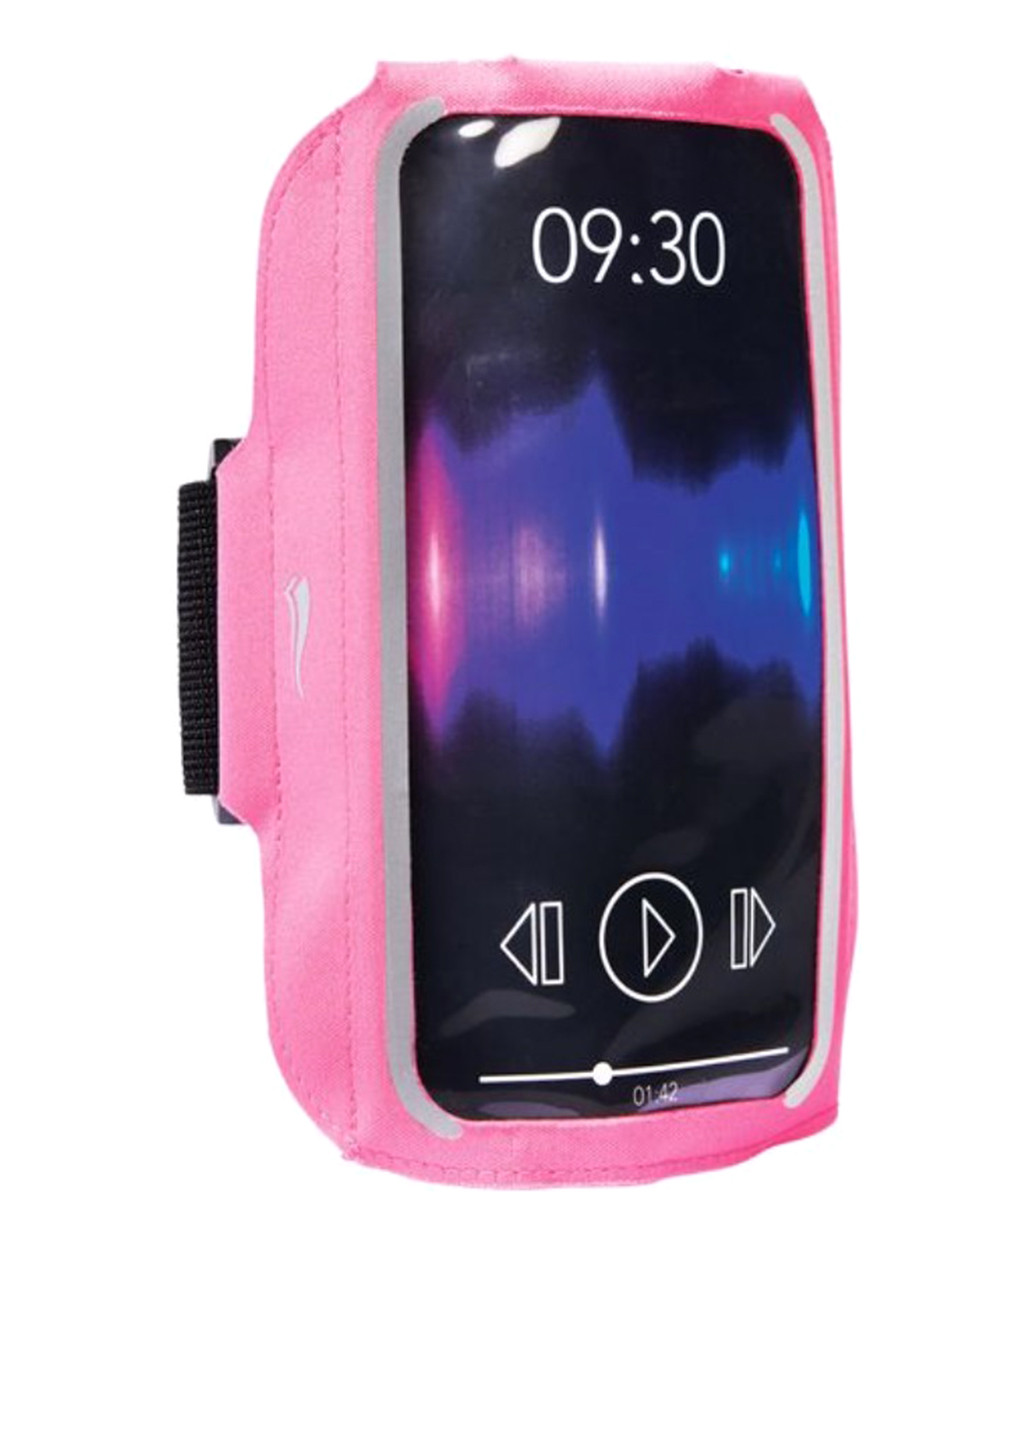 Чехол на руку для телефона спортивный, 16х8 см Crivit розовый